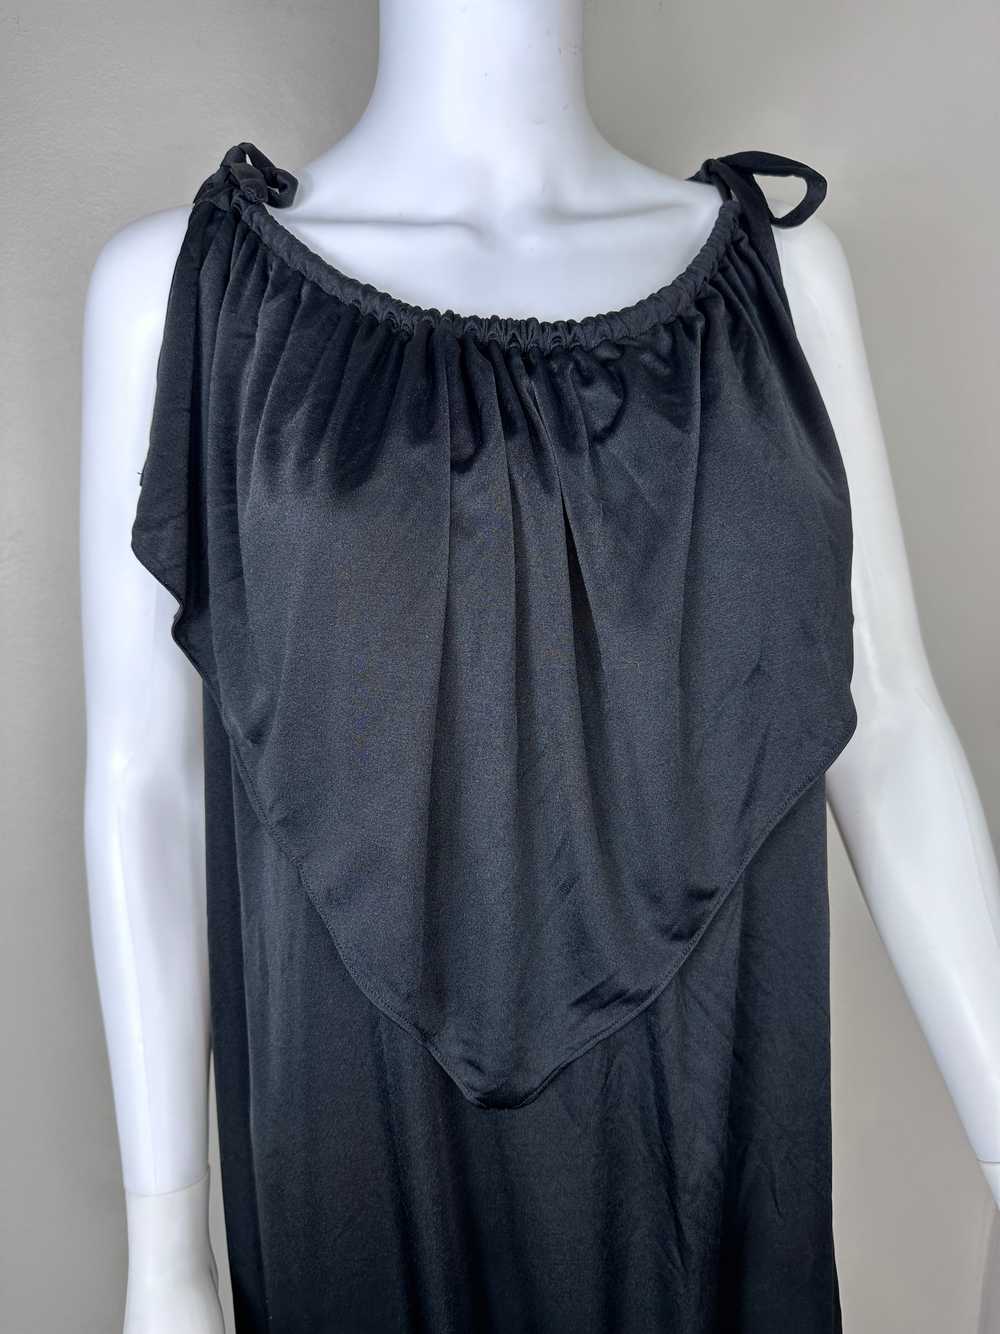 1970s Grecian Inspired Black Maxi Dress, Size 3X - image 2